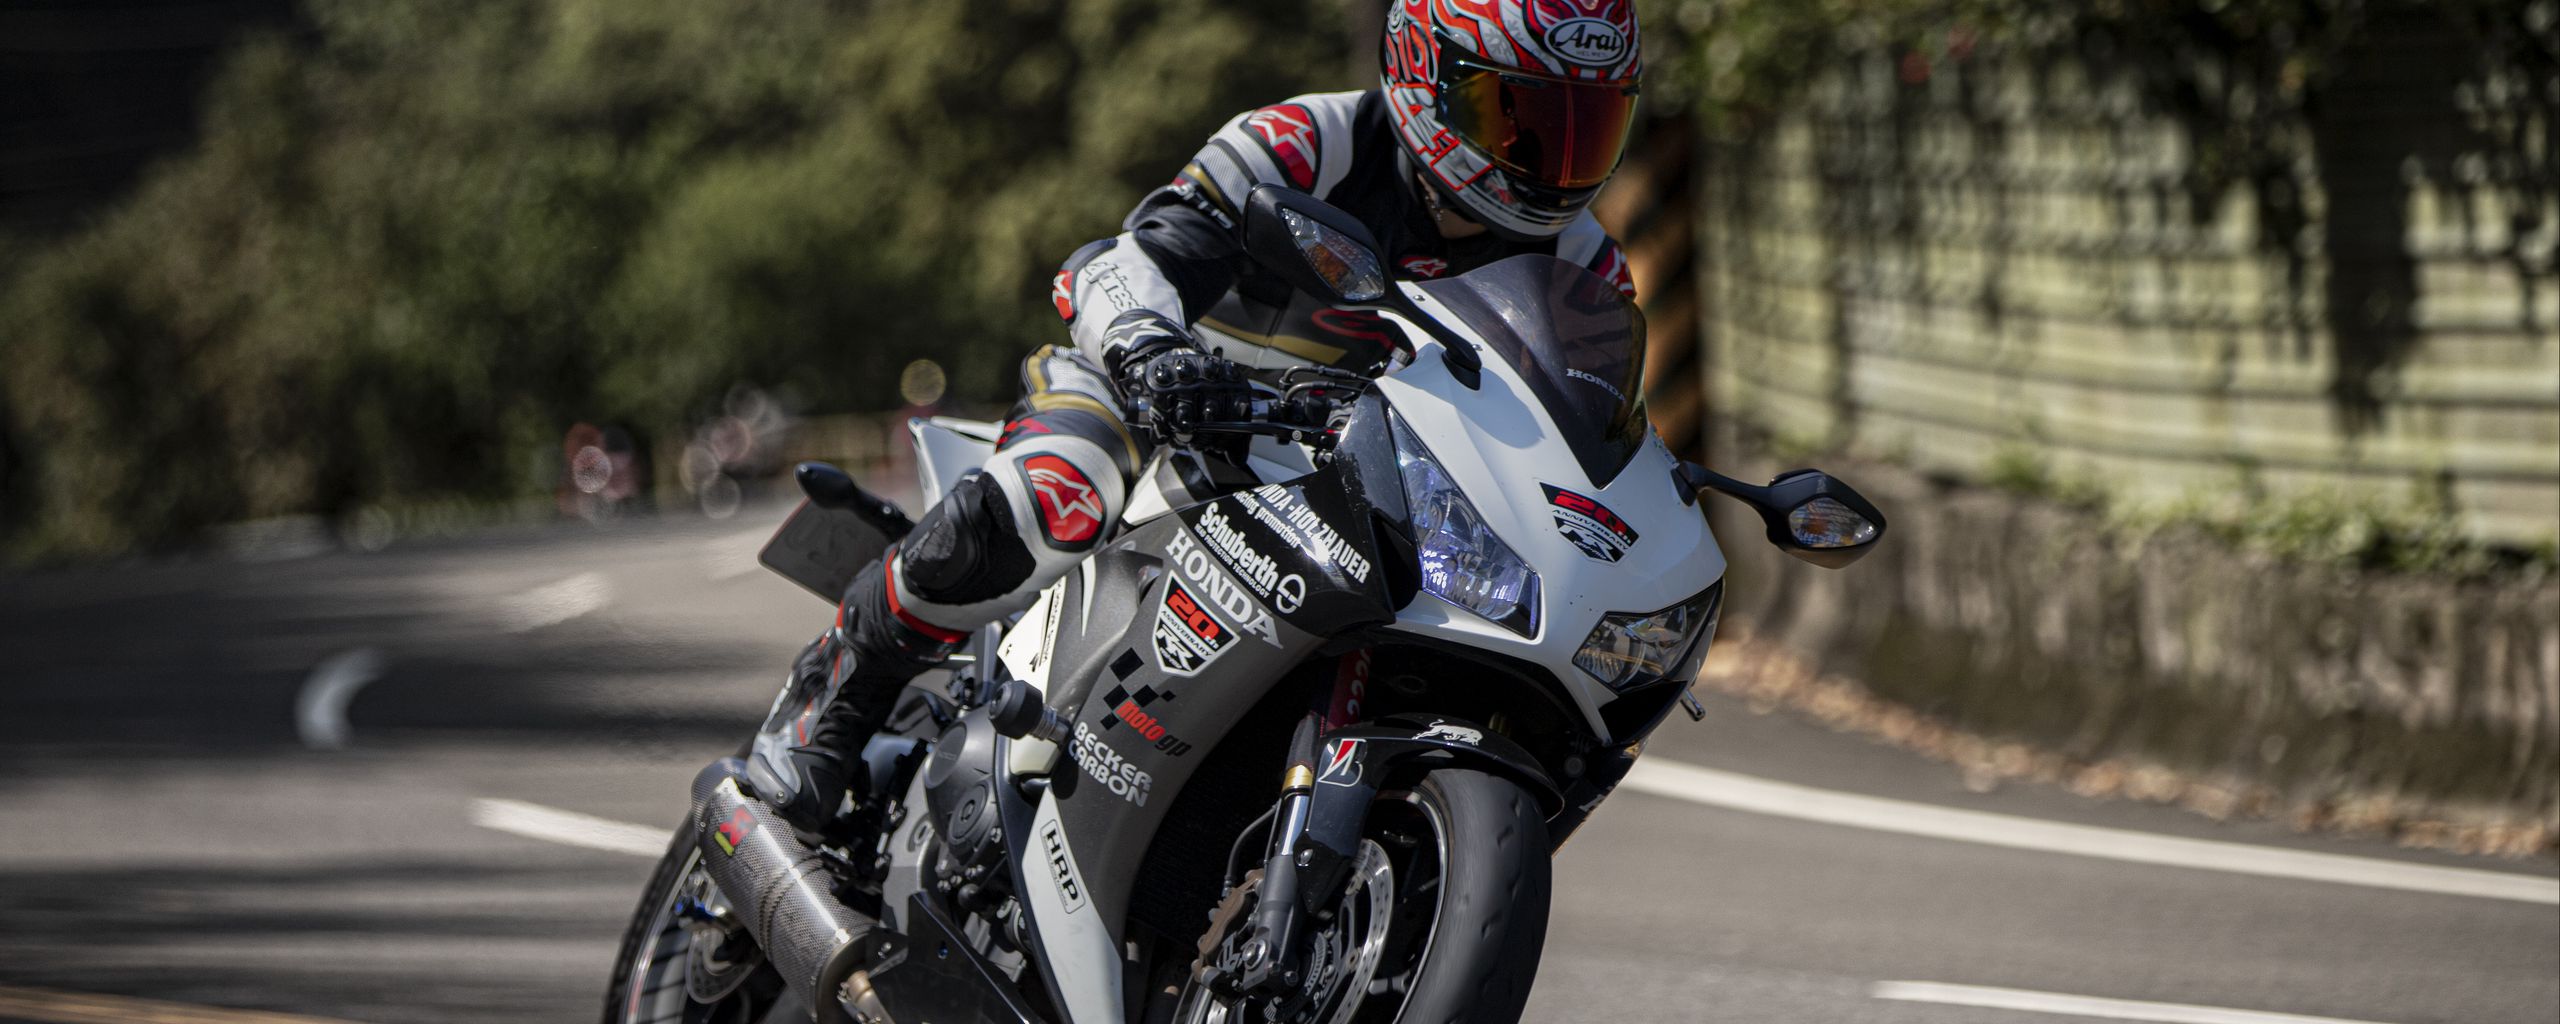 2560x1024 Wallpaper motorcycle, motorcyclist, helmet, motorcycle racing